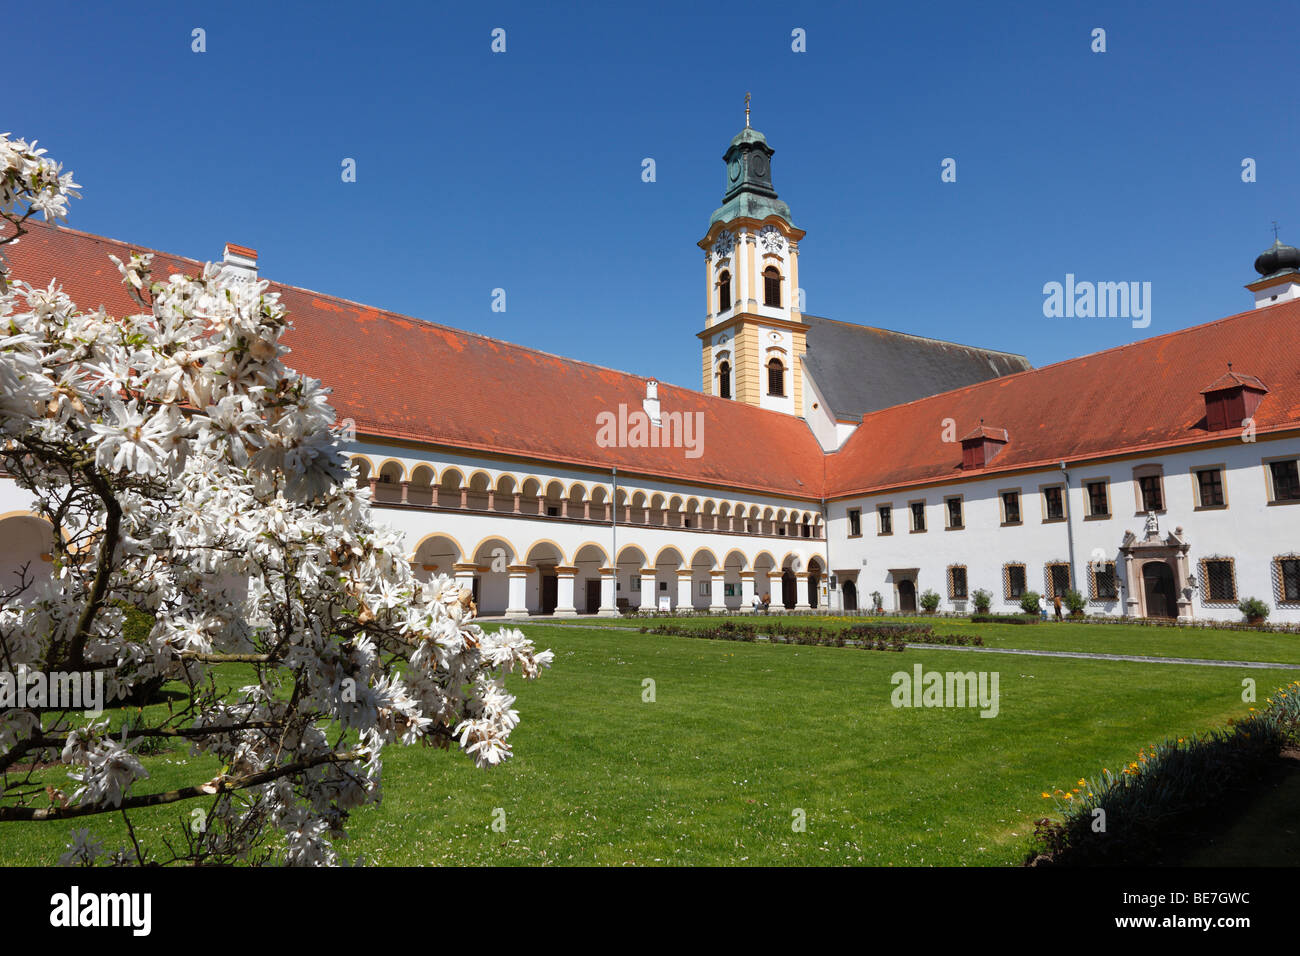 Augustinian chapter of canons monastery, Reichersberg, Innviertel, Upper Austria, Austria, Europe Stock Photo